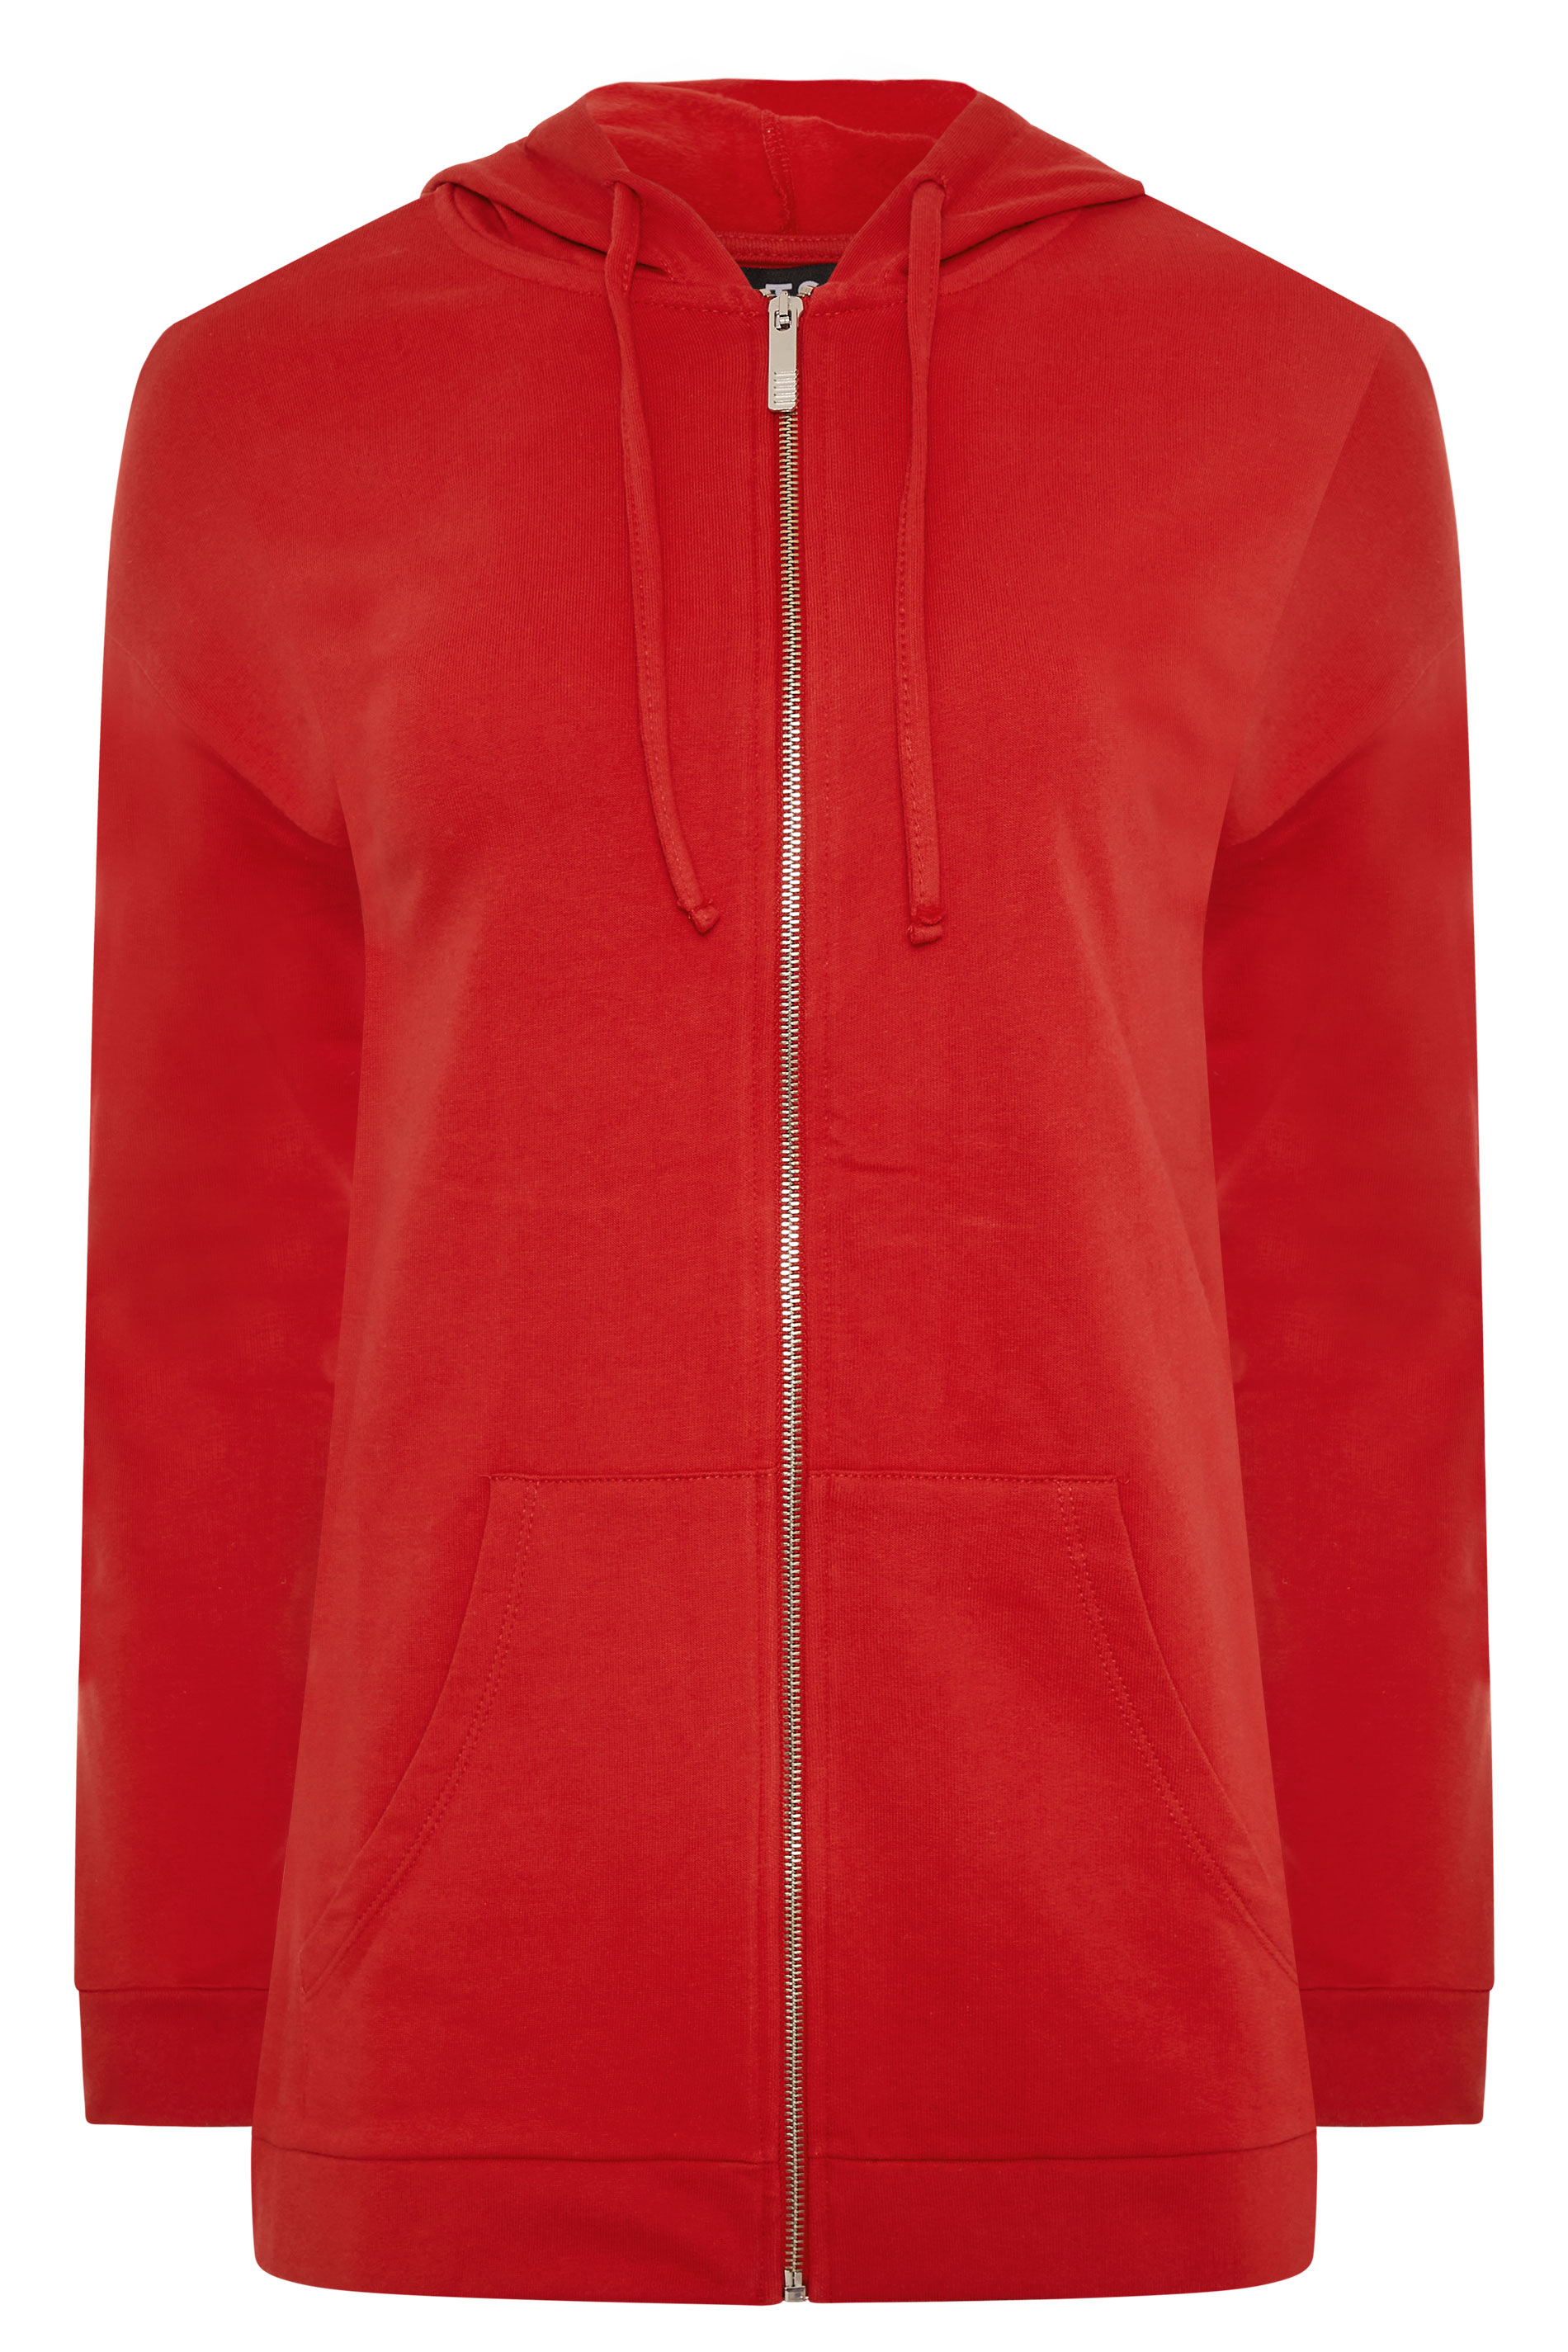 LTS Bright Red Zipper Hoodie | Long Tall Sally